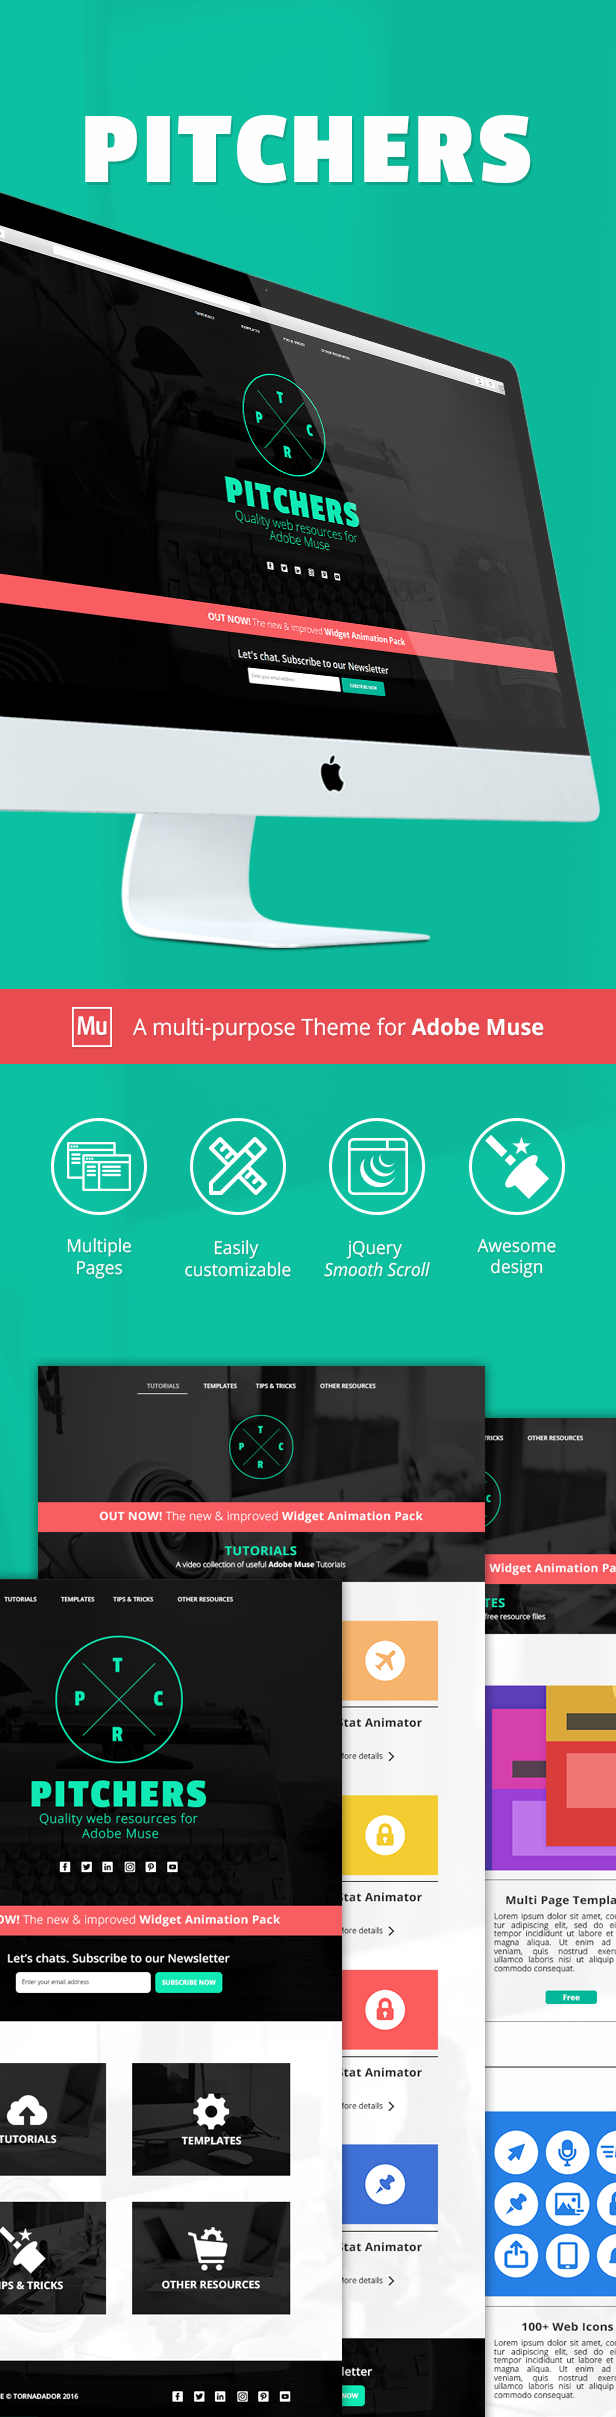 Pitchers | A Multi-Purpose Adobe Muse Template - 1